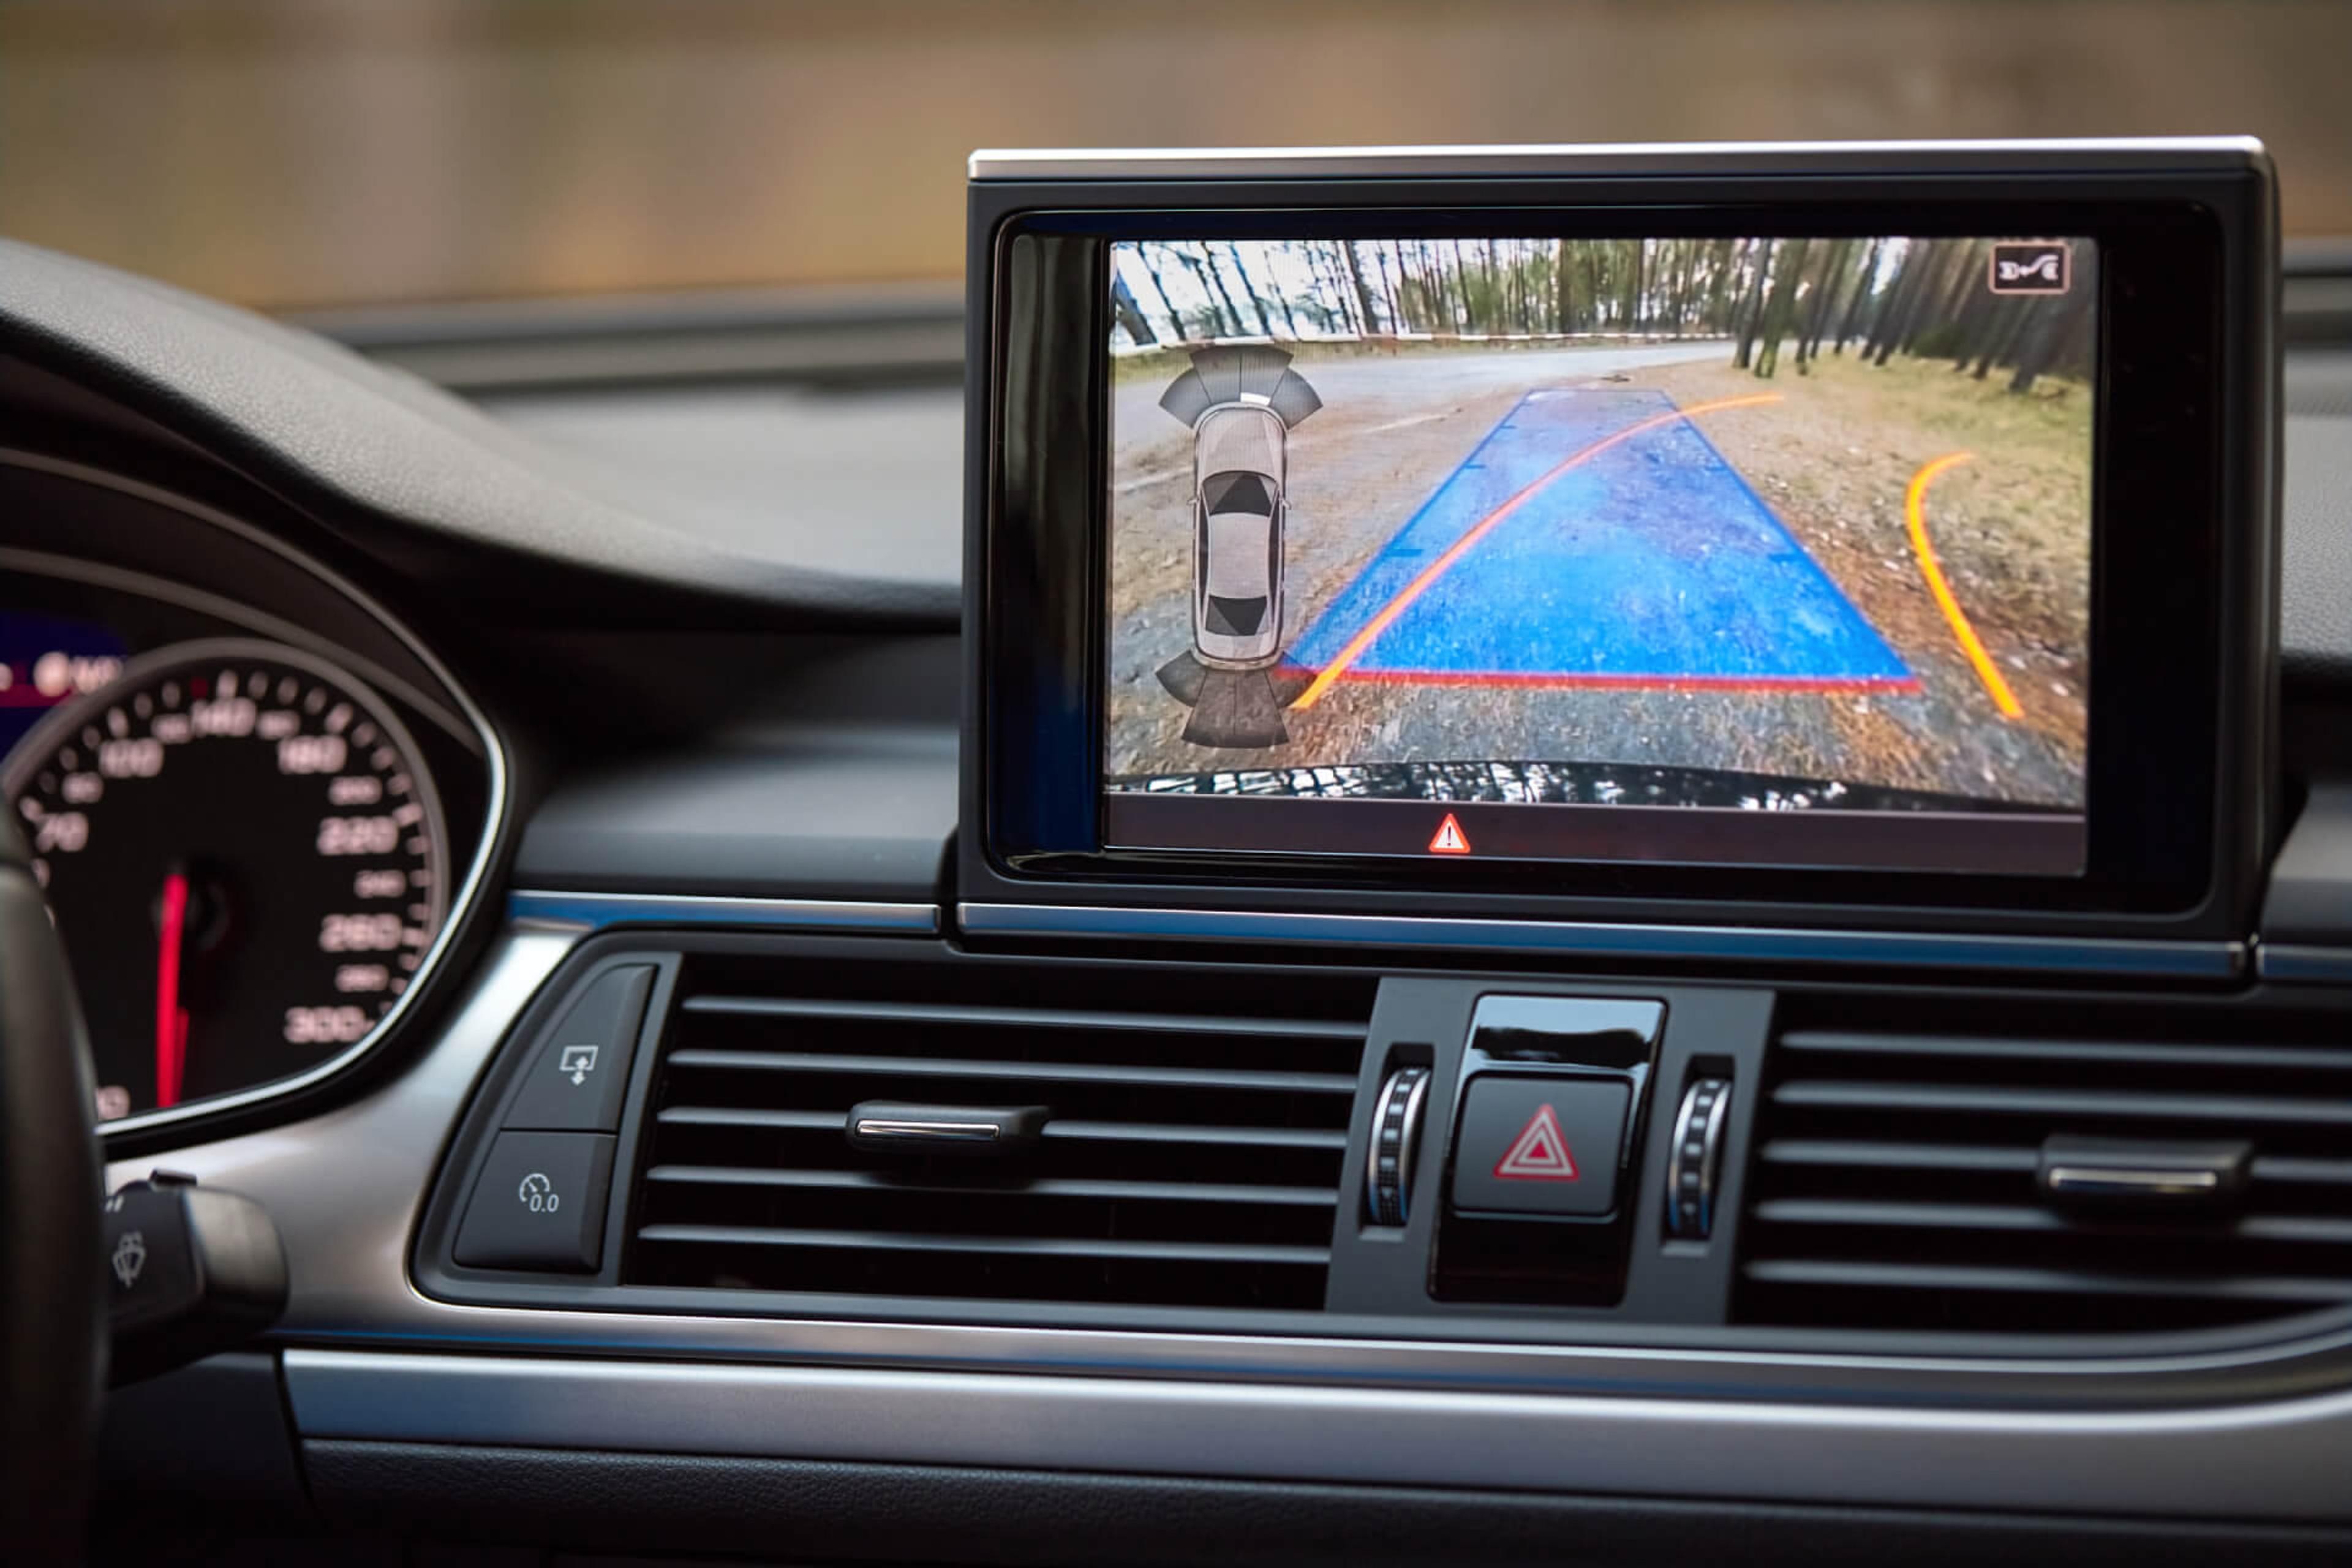 Rear view camera in car board monitor